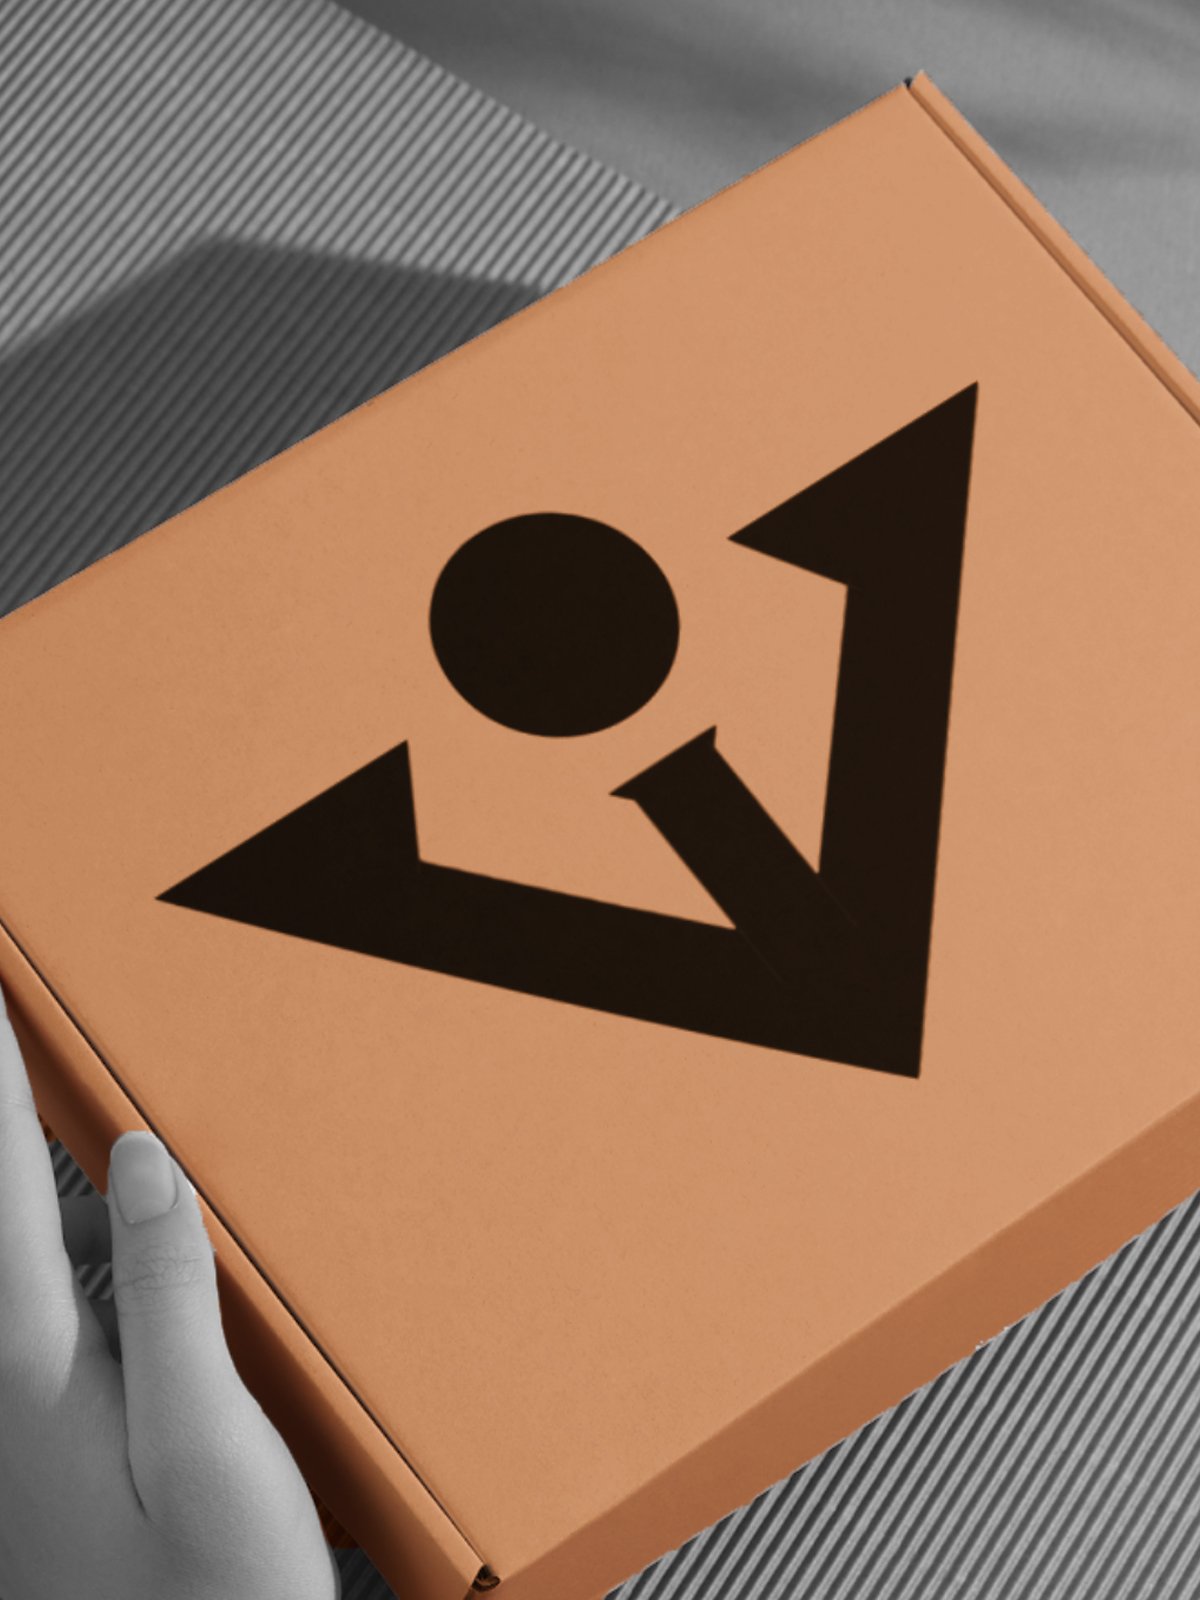 Orange package with VivanTee golf logo on the box.